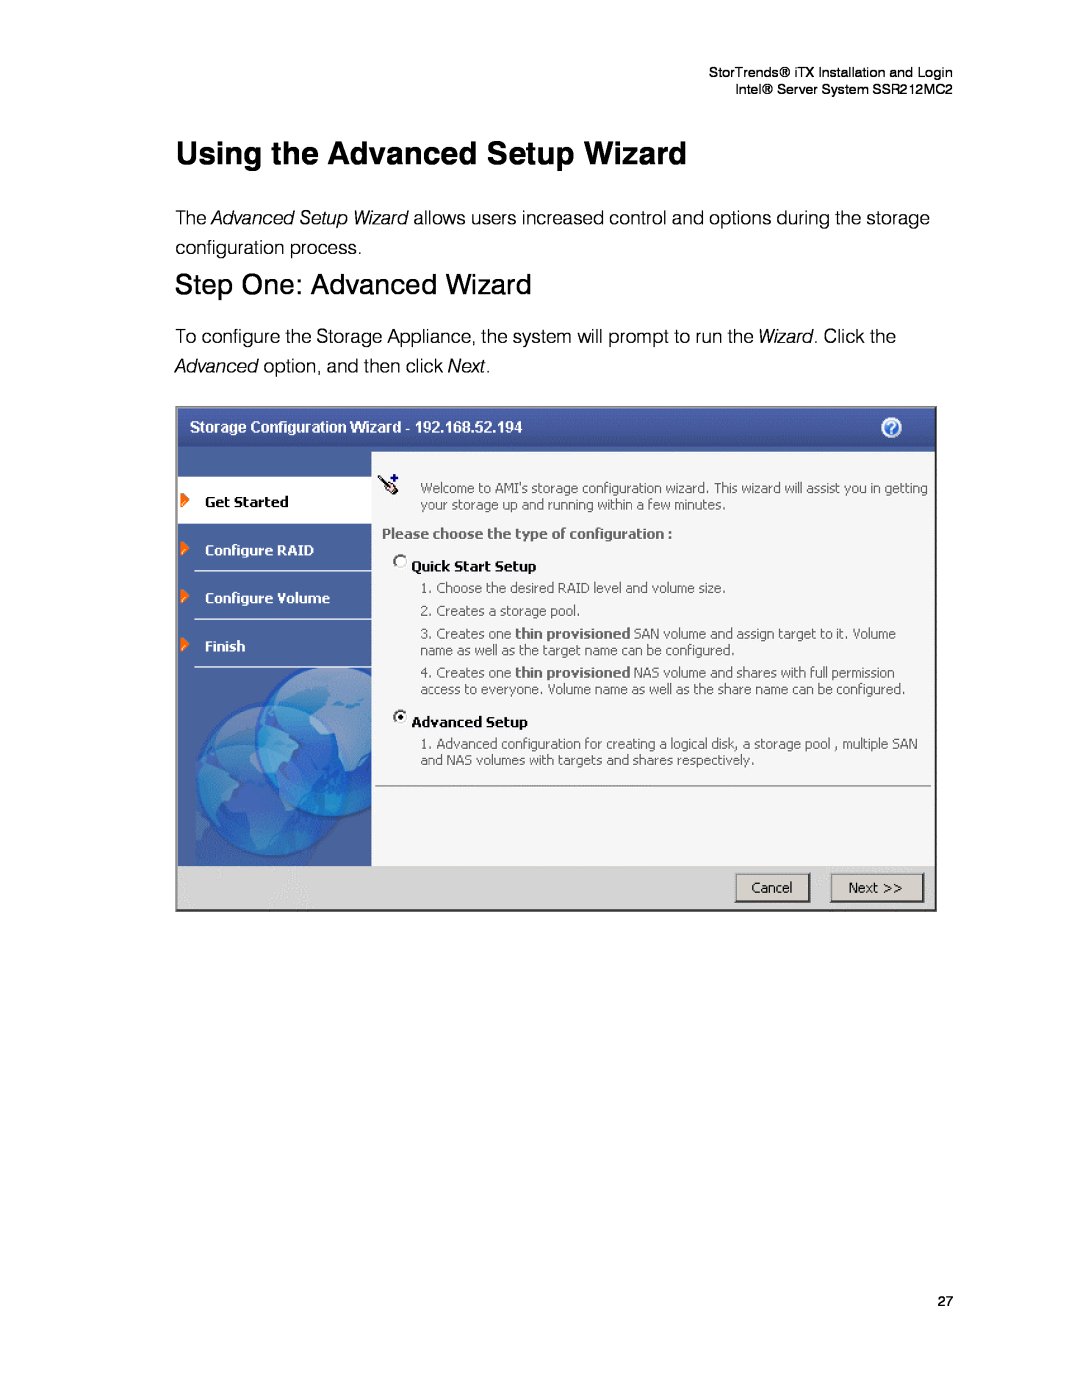 Intel SSR212MC2 manual Using the Advanced Setup Wizard, Step One Advanced Wizard 